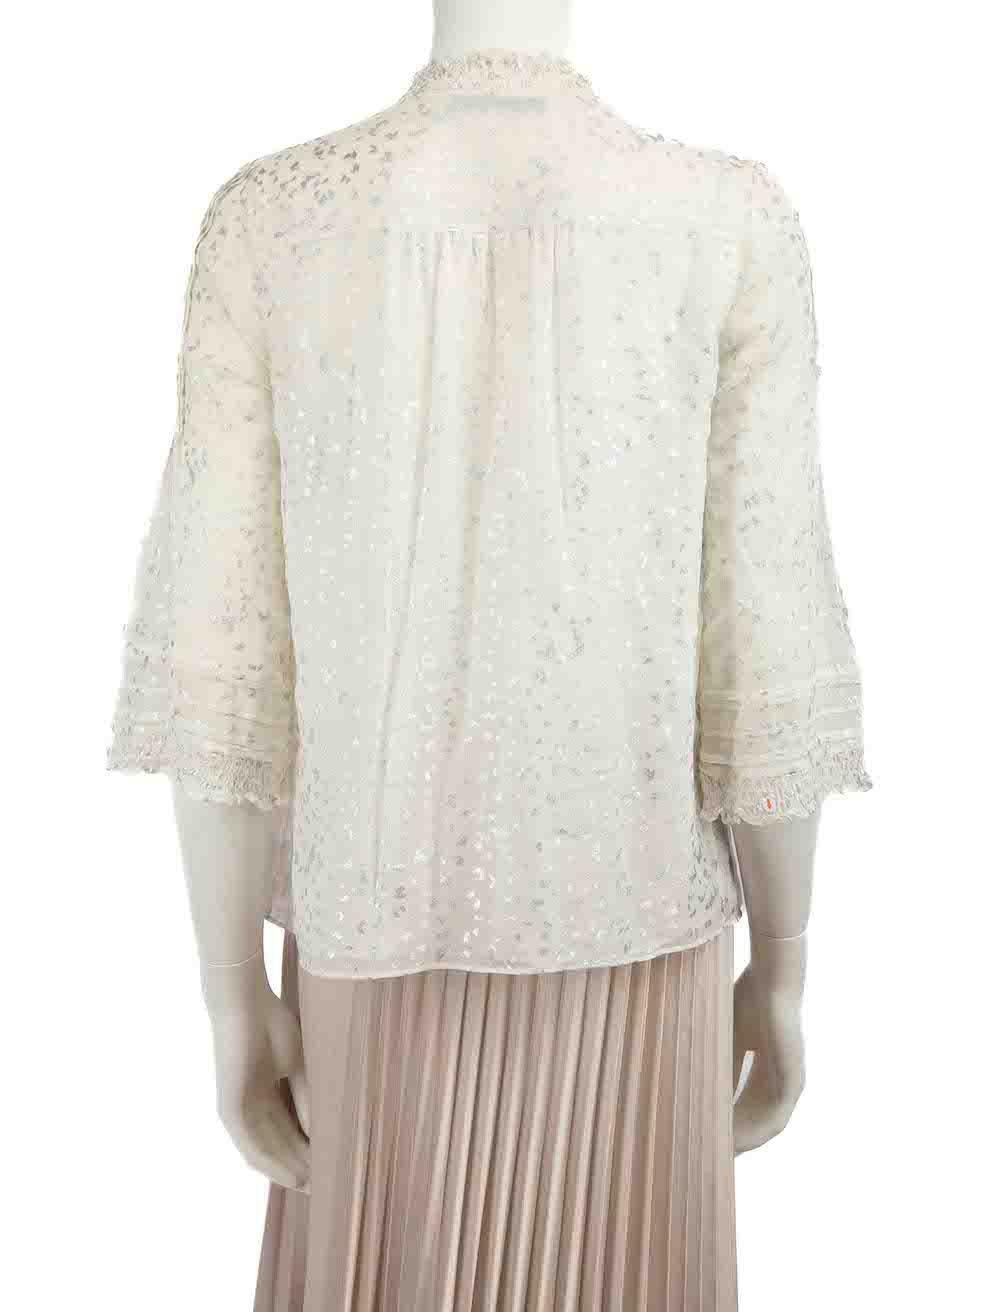 Diane Von Furstenberg White Metallic Buttoned Top Size S In Good Condition For Sale In London, GB